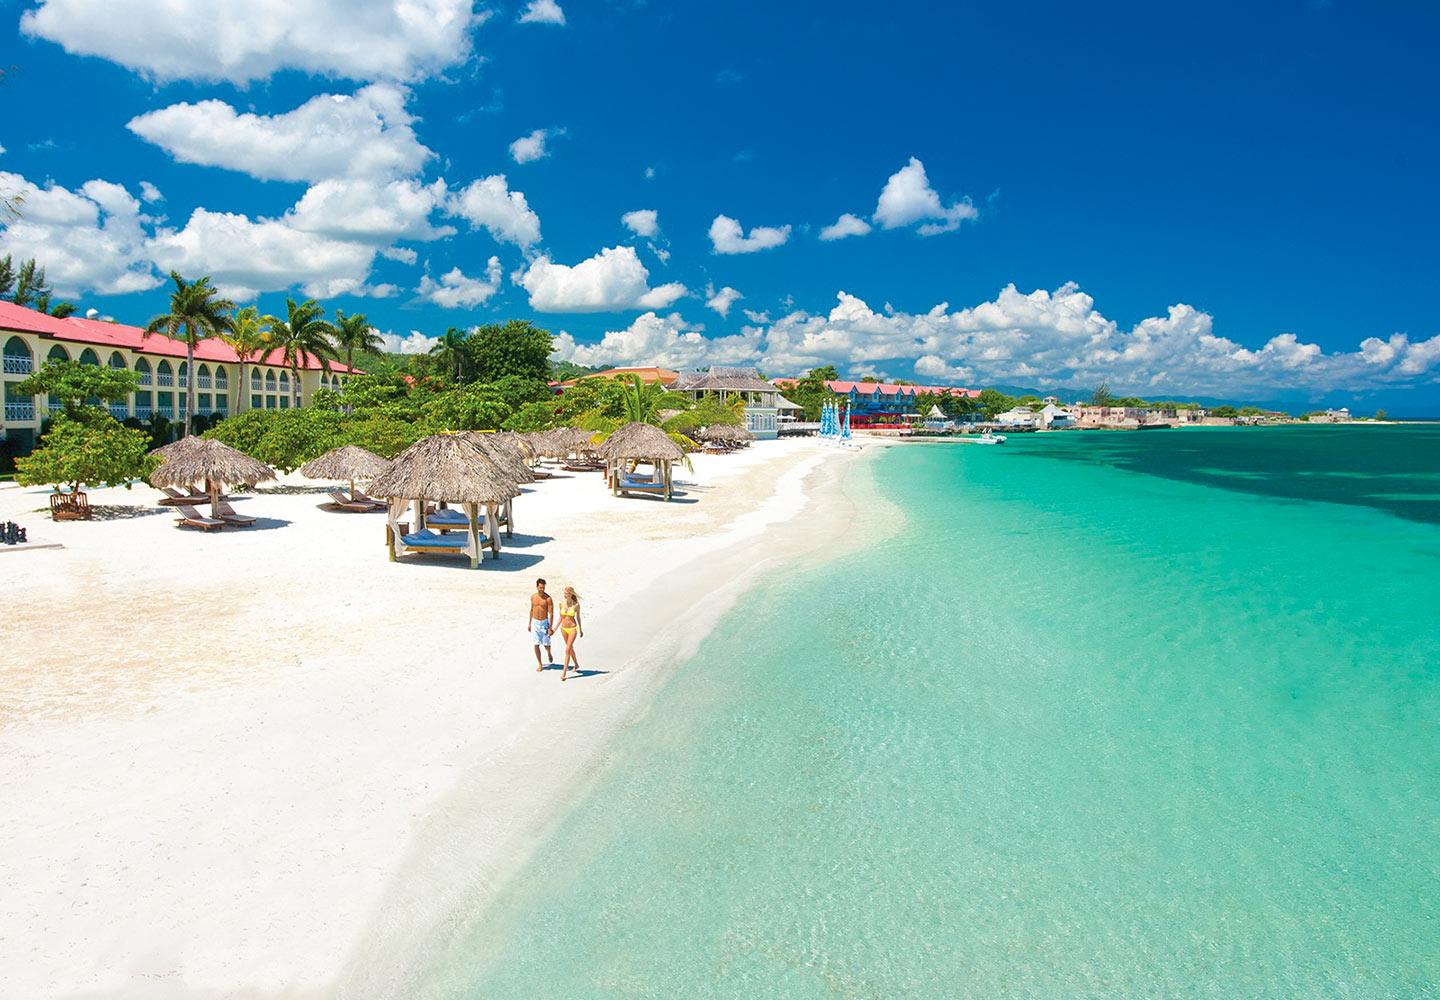 Sandals Jamaica All Inclusive Resort & Luxury Beach Holiday - Montego Bay Beach Resort1440 x 1000